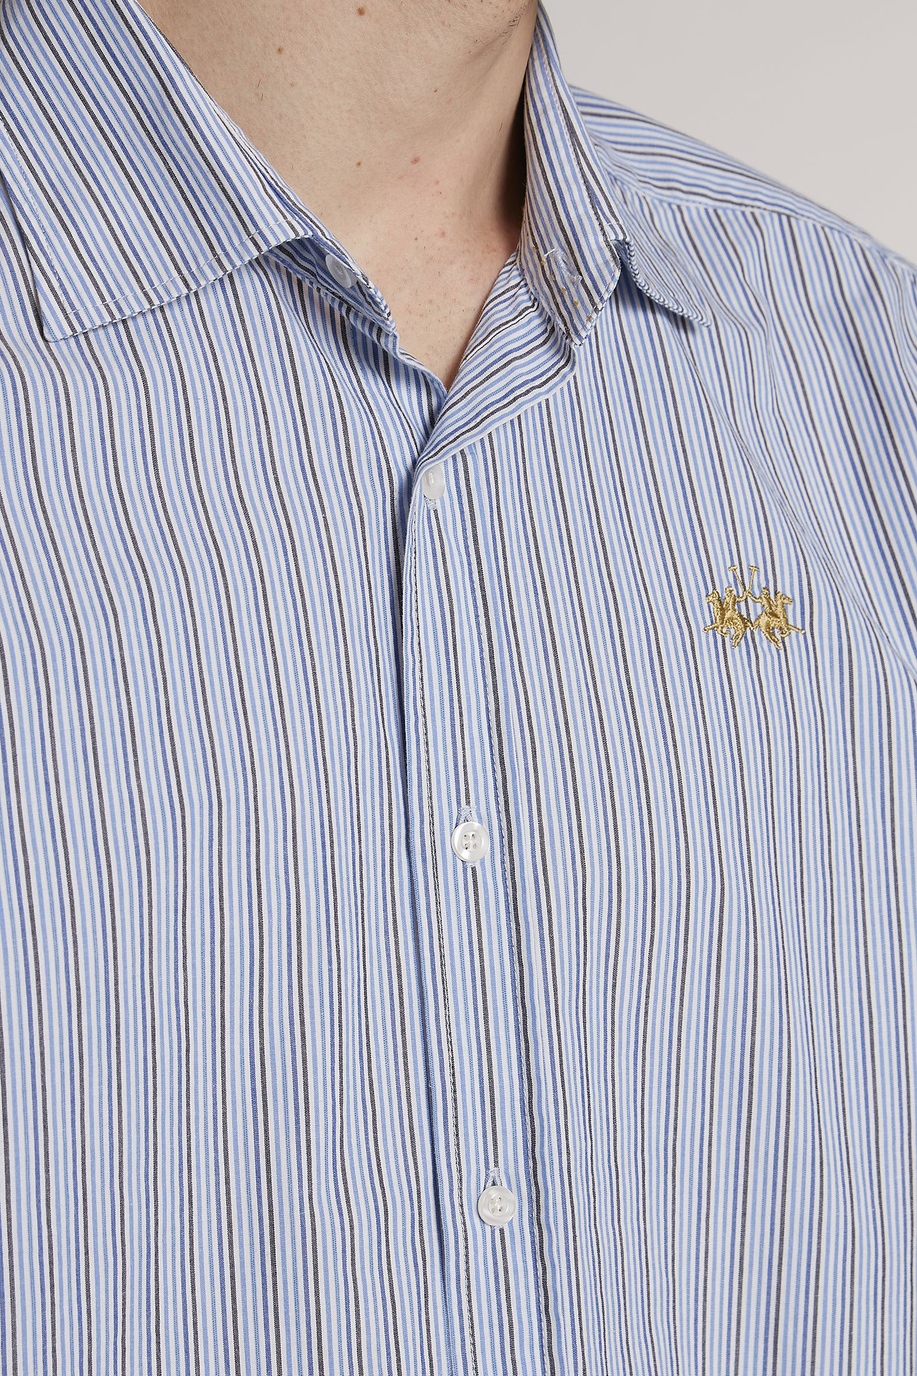 Men's long-sleeved regular-fit shirt